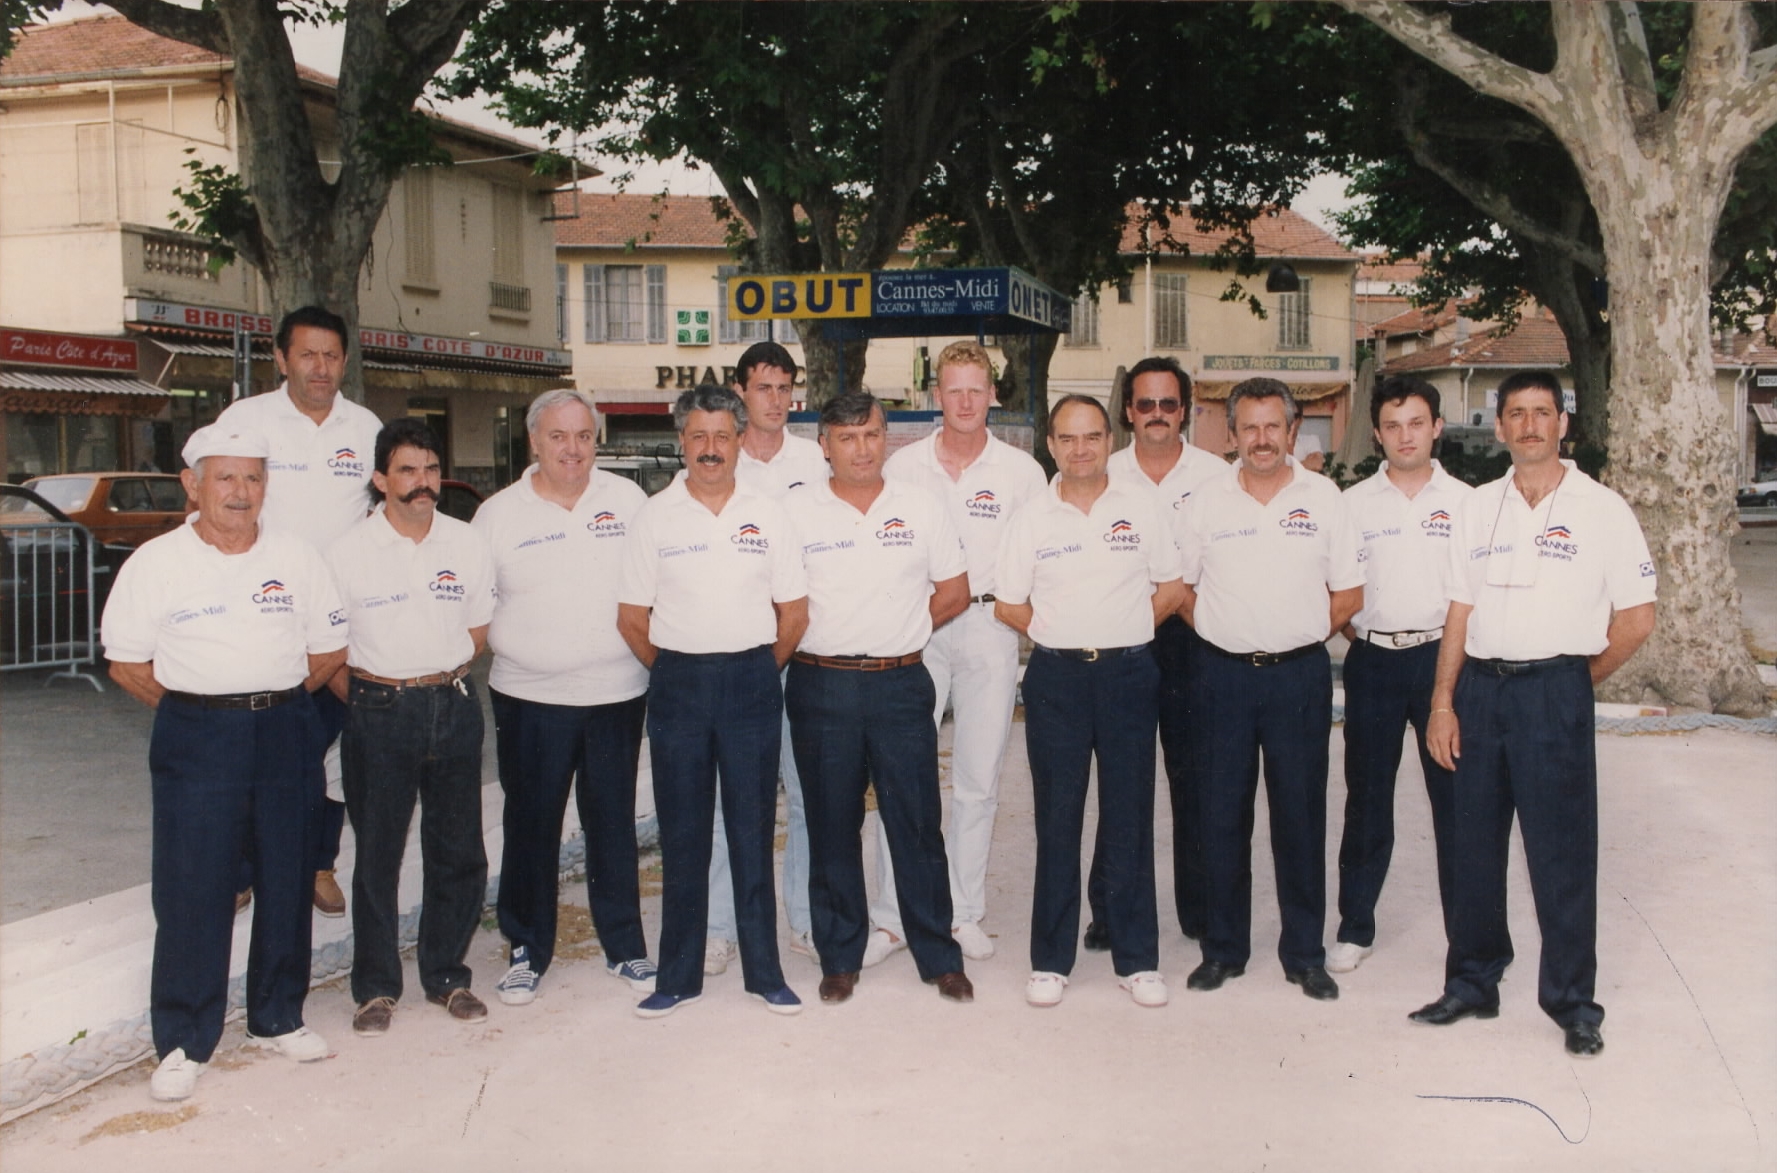 1992 le team Obut C.A.S.